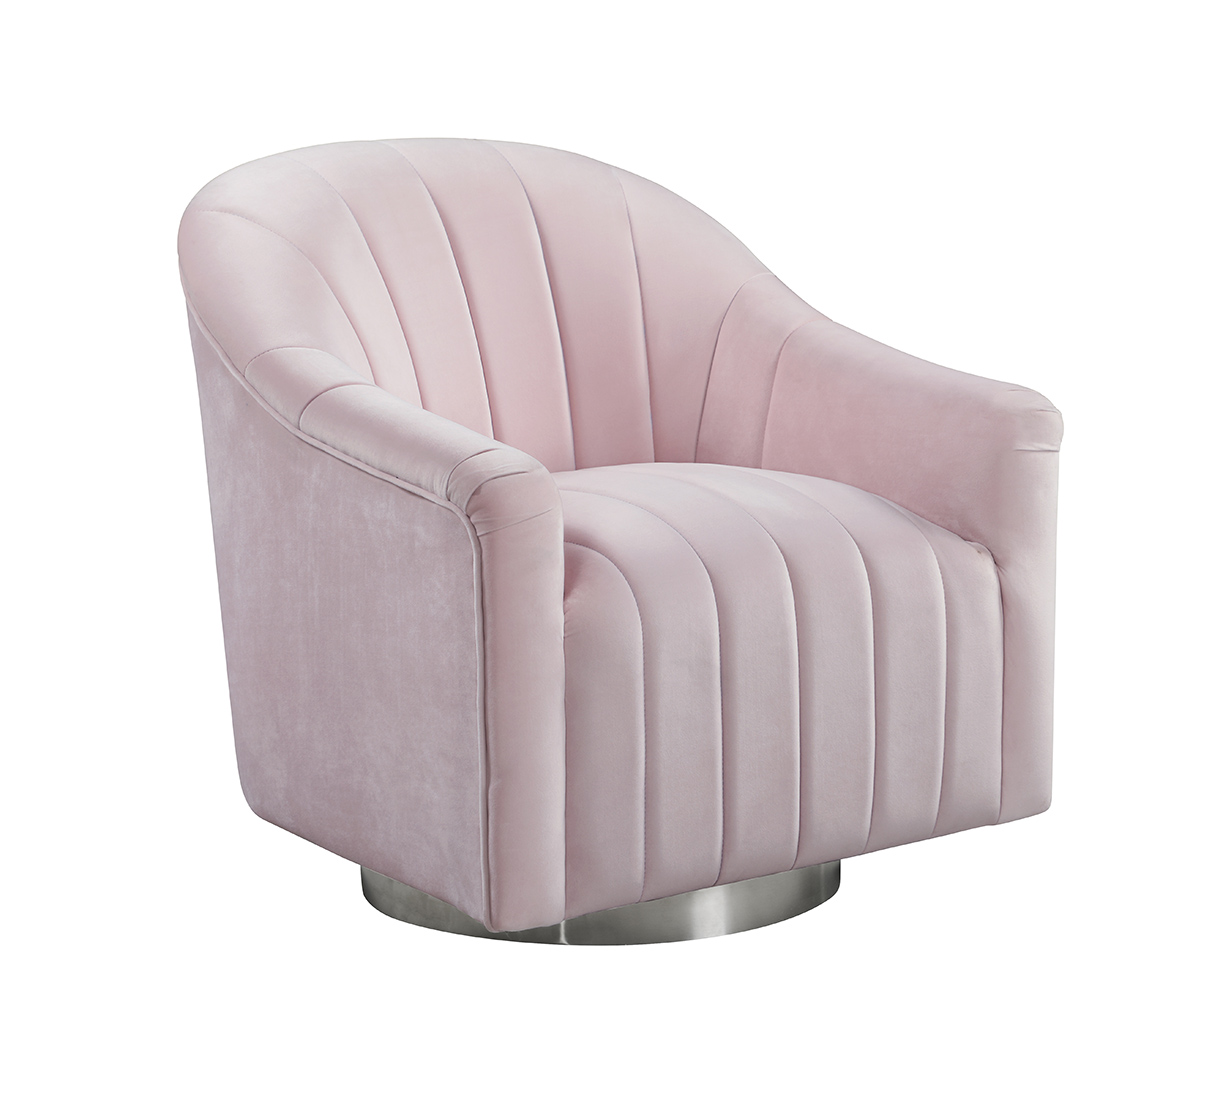 Cartlor Swivel Chair Shell Pink